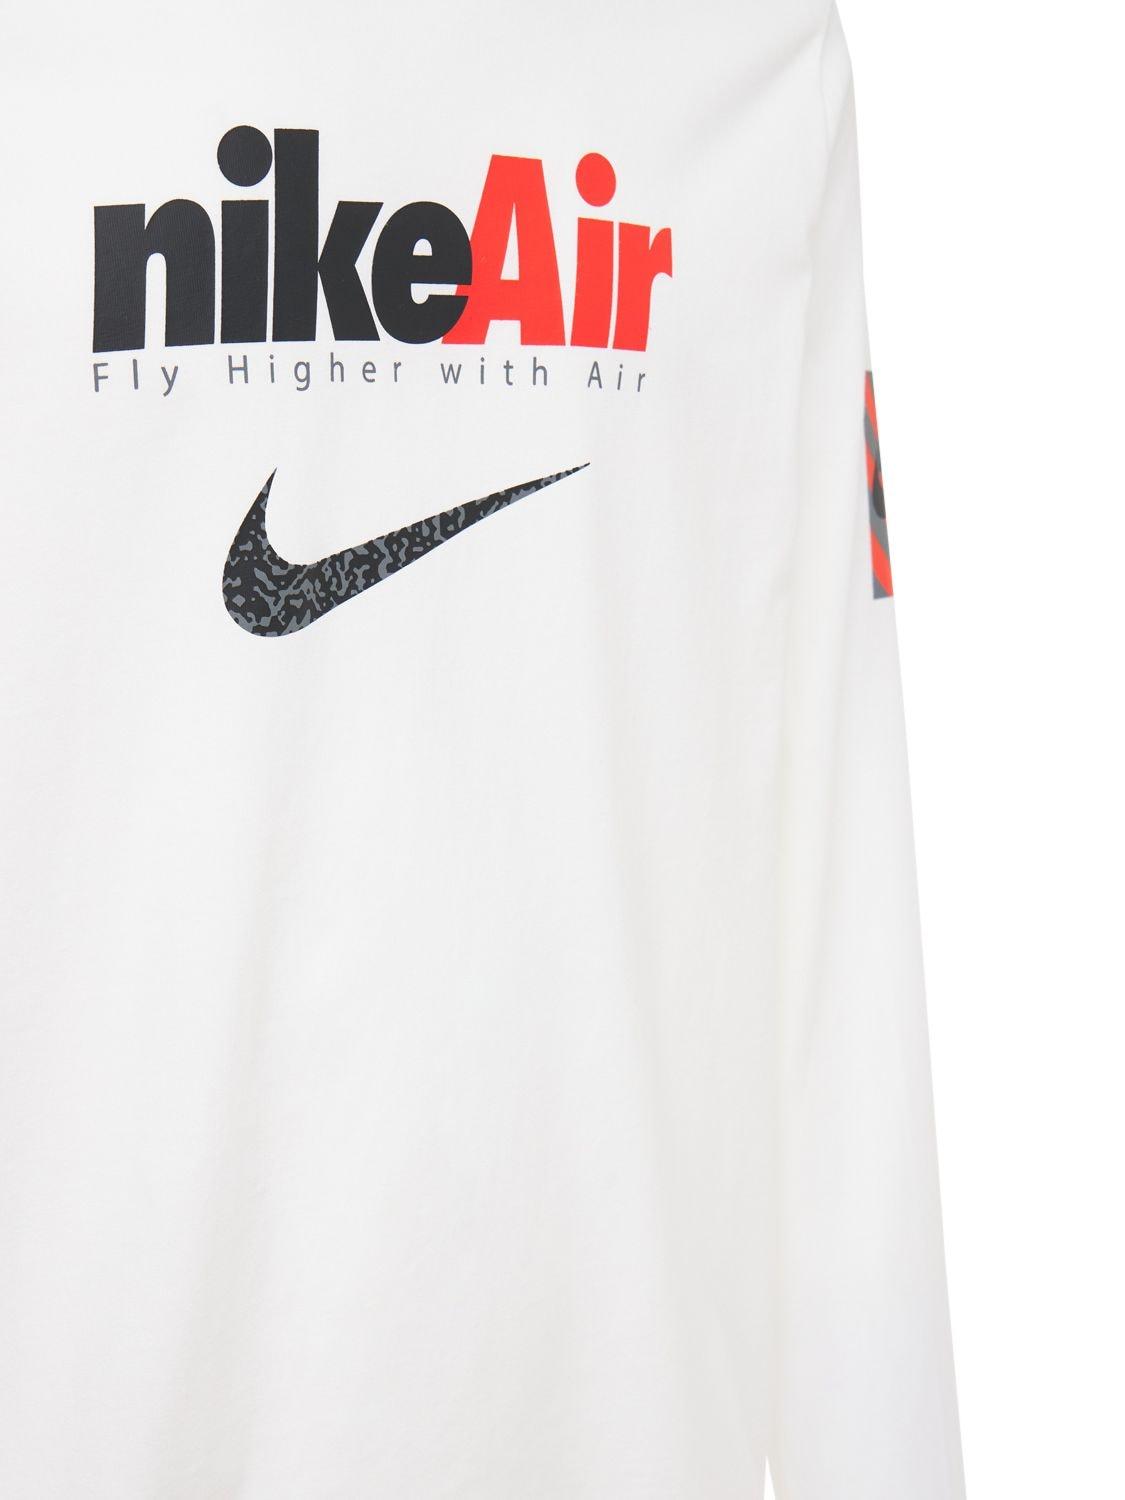 Chicago Bulls Nike Air Traffic Control Logo Long Sleeve T-Shirt - Mens